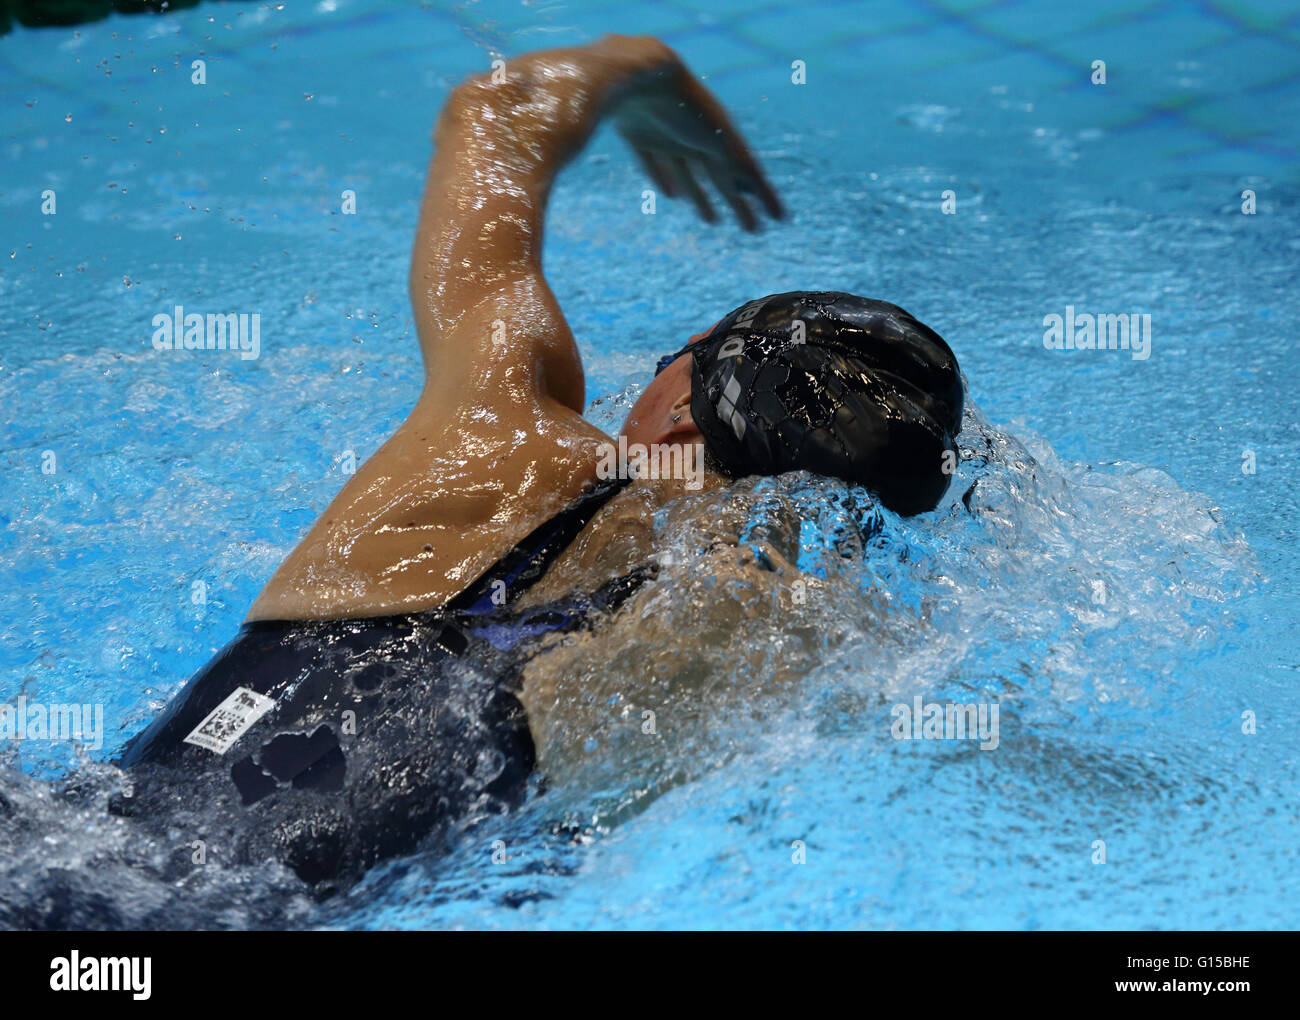 German Swimming Championships, Deutsche Meisterschaften im Schwimmen, and Olympic qualification trials in Berlin, May 2016 Stock Photo